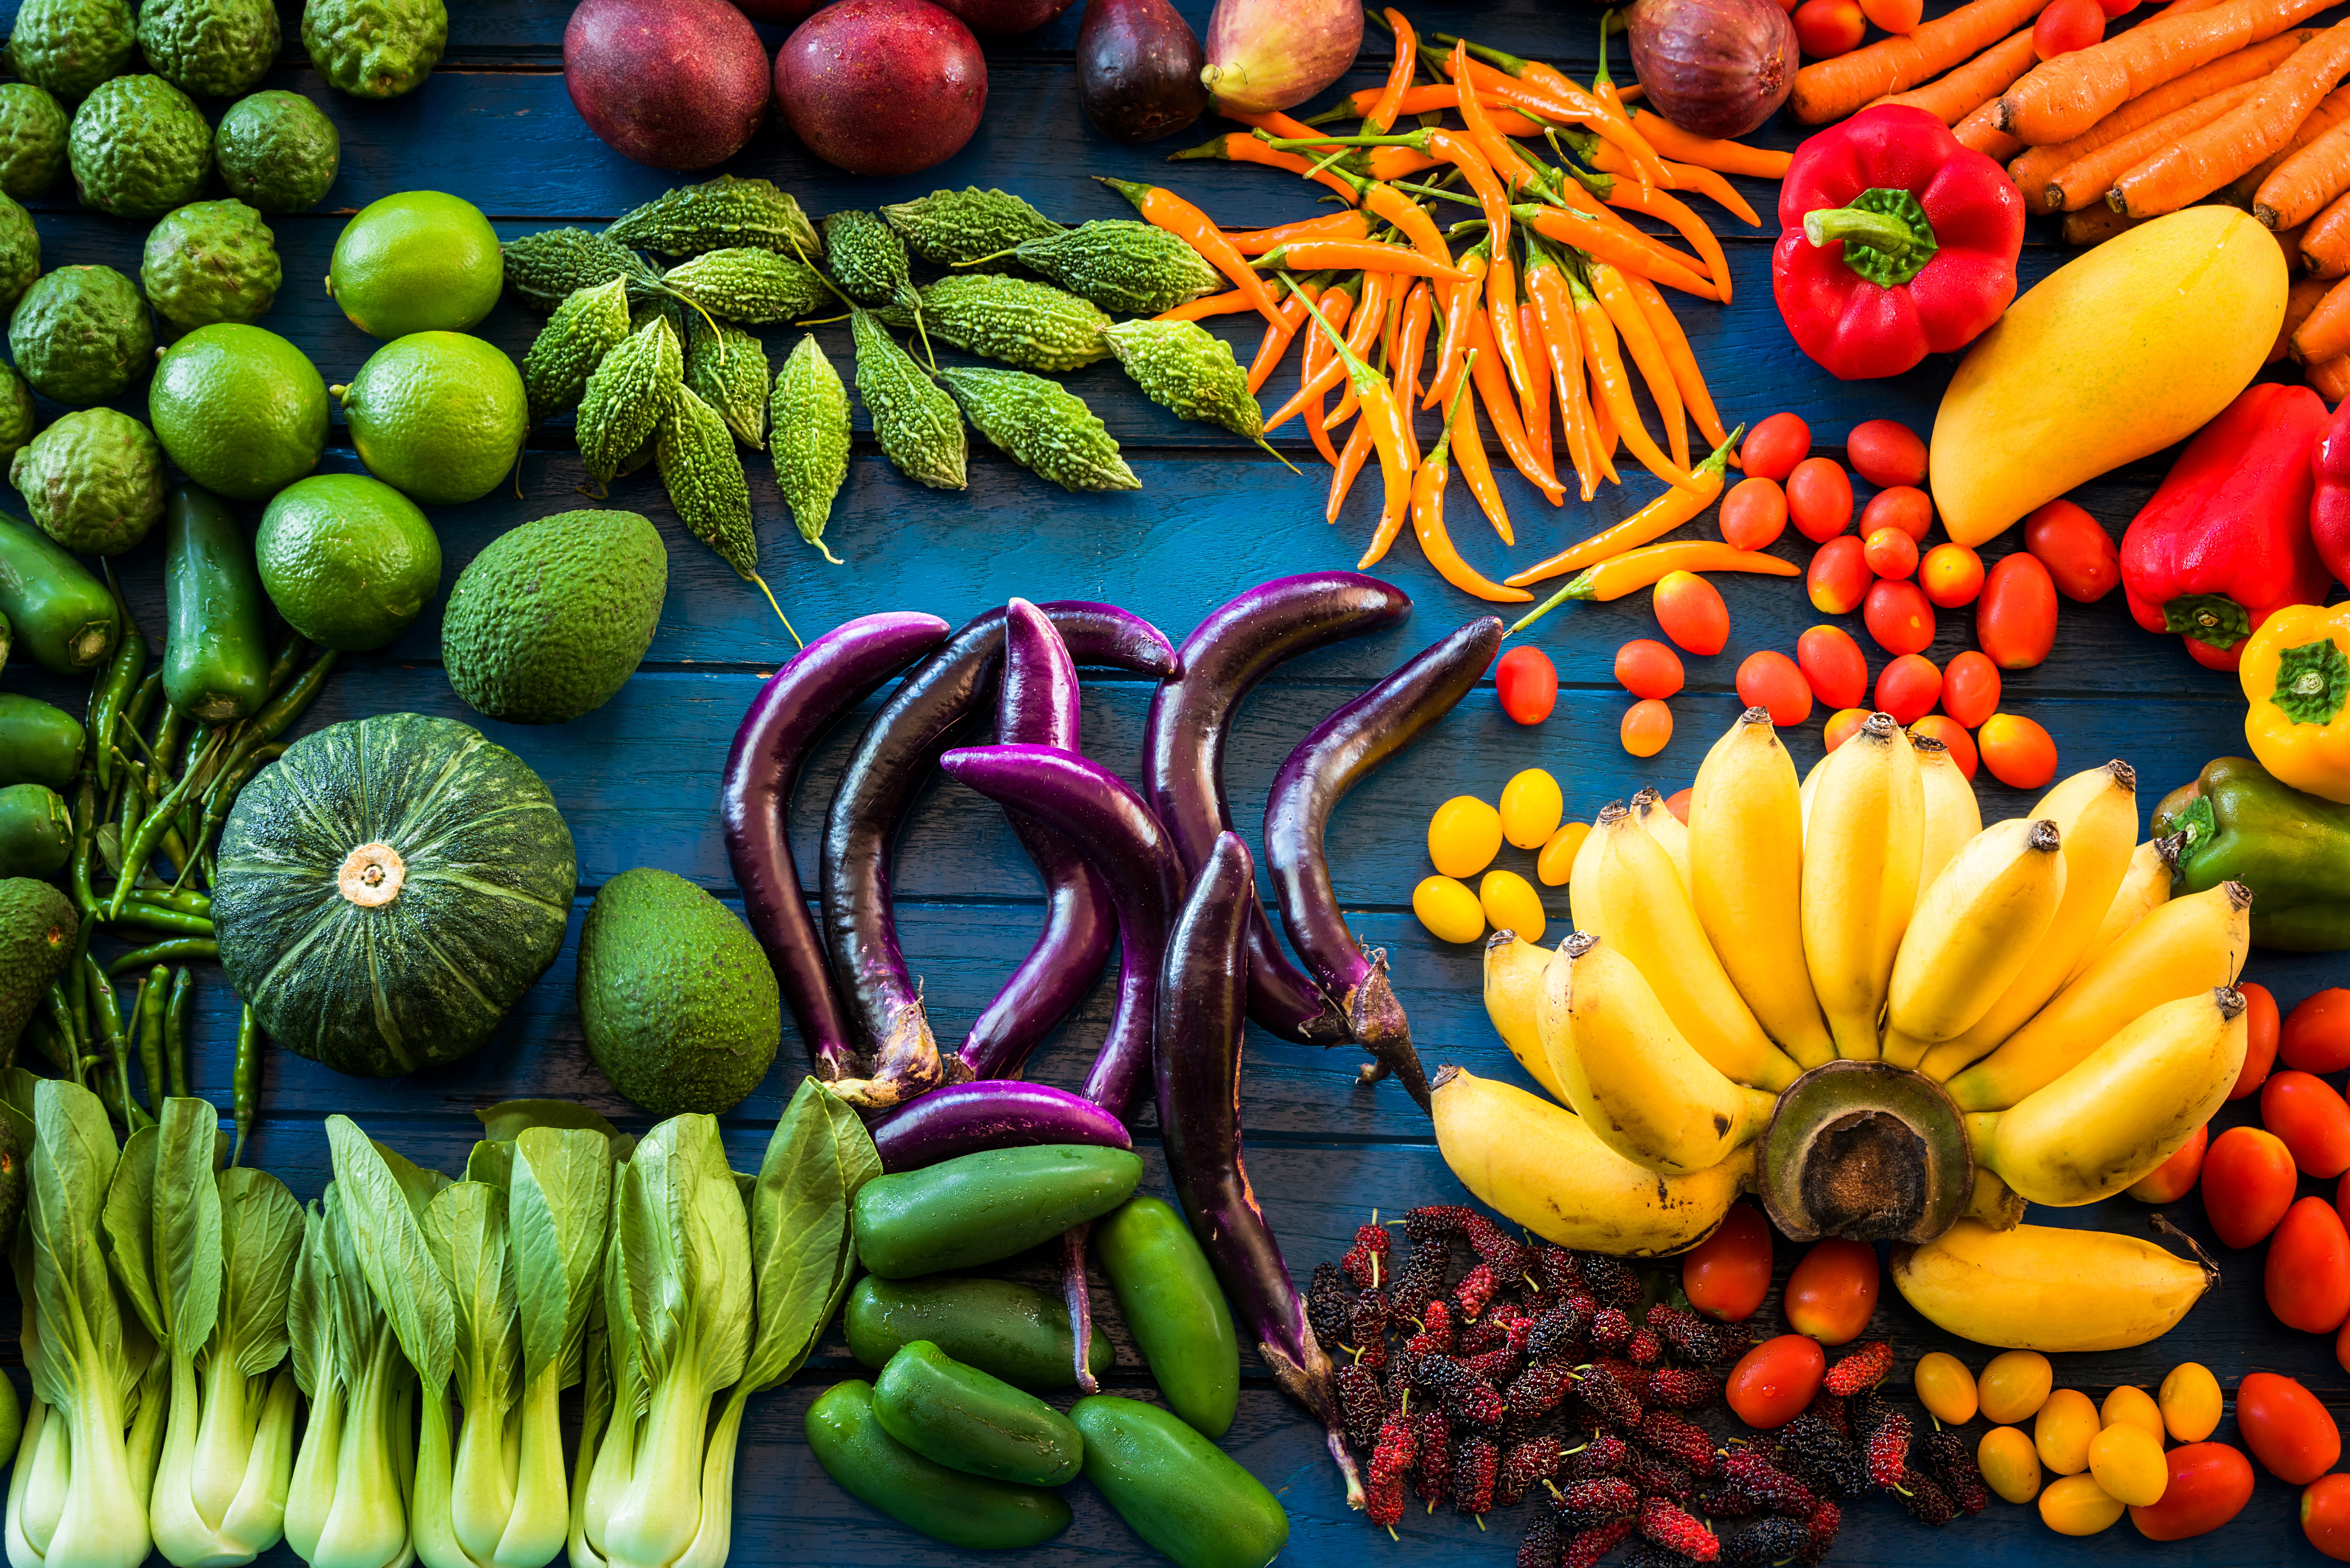 Vegetables, fruit, cuts, range